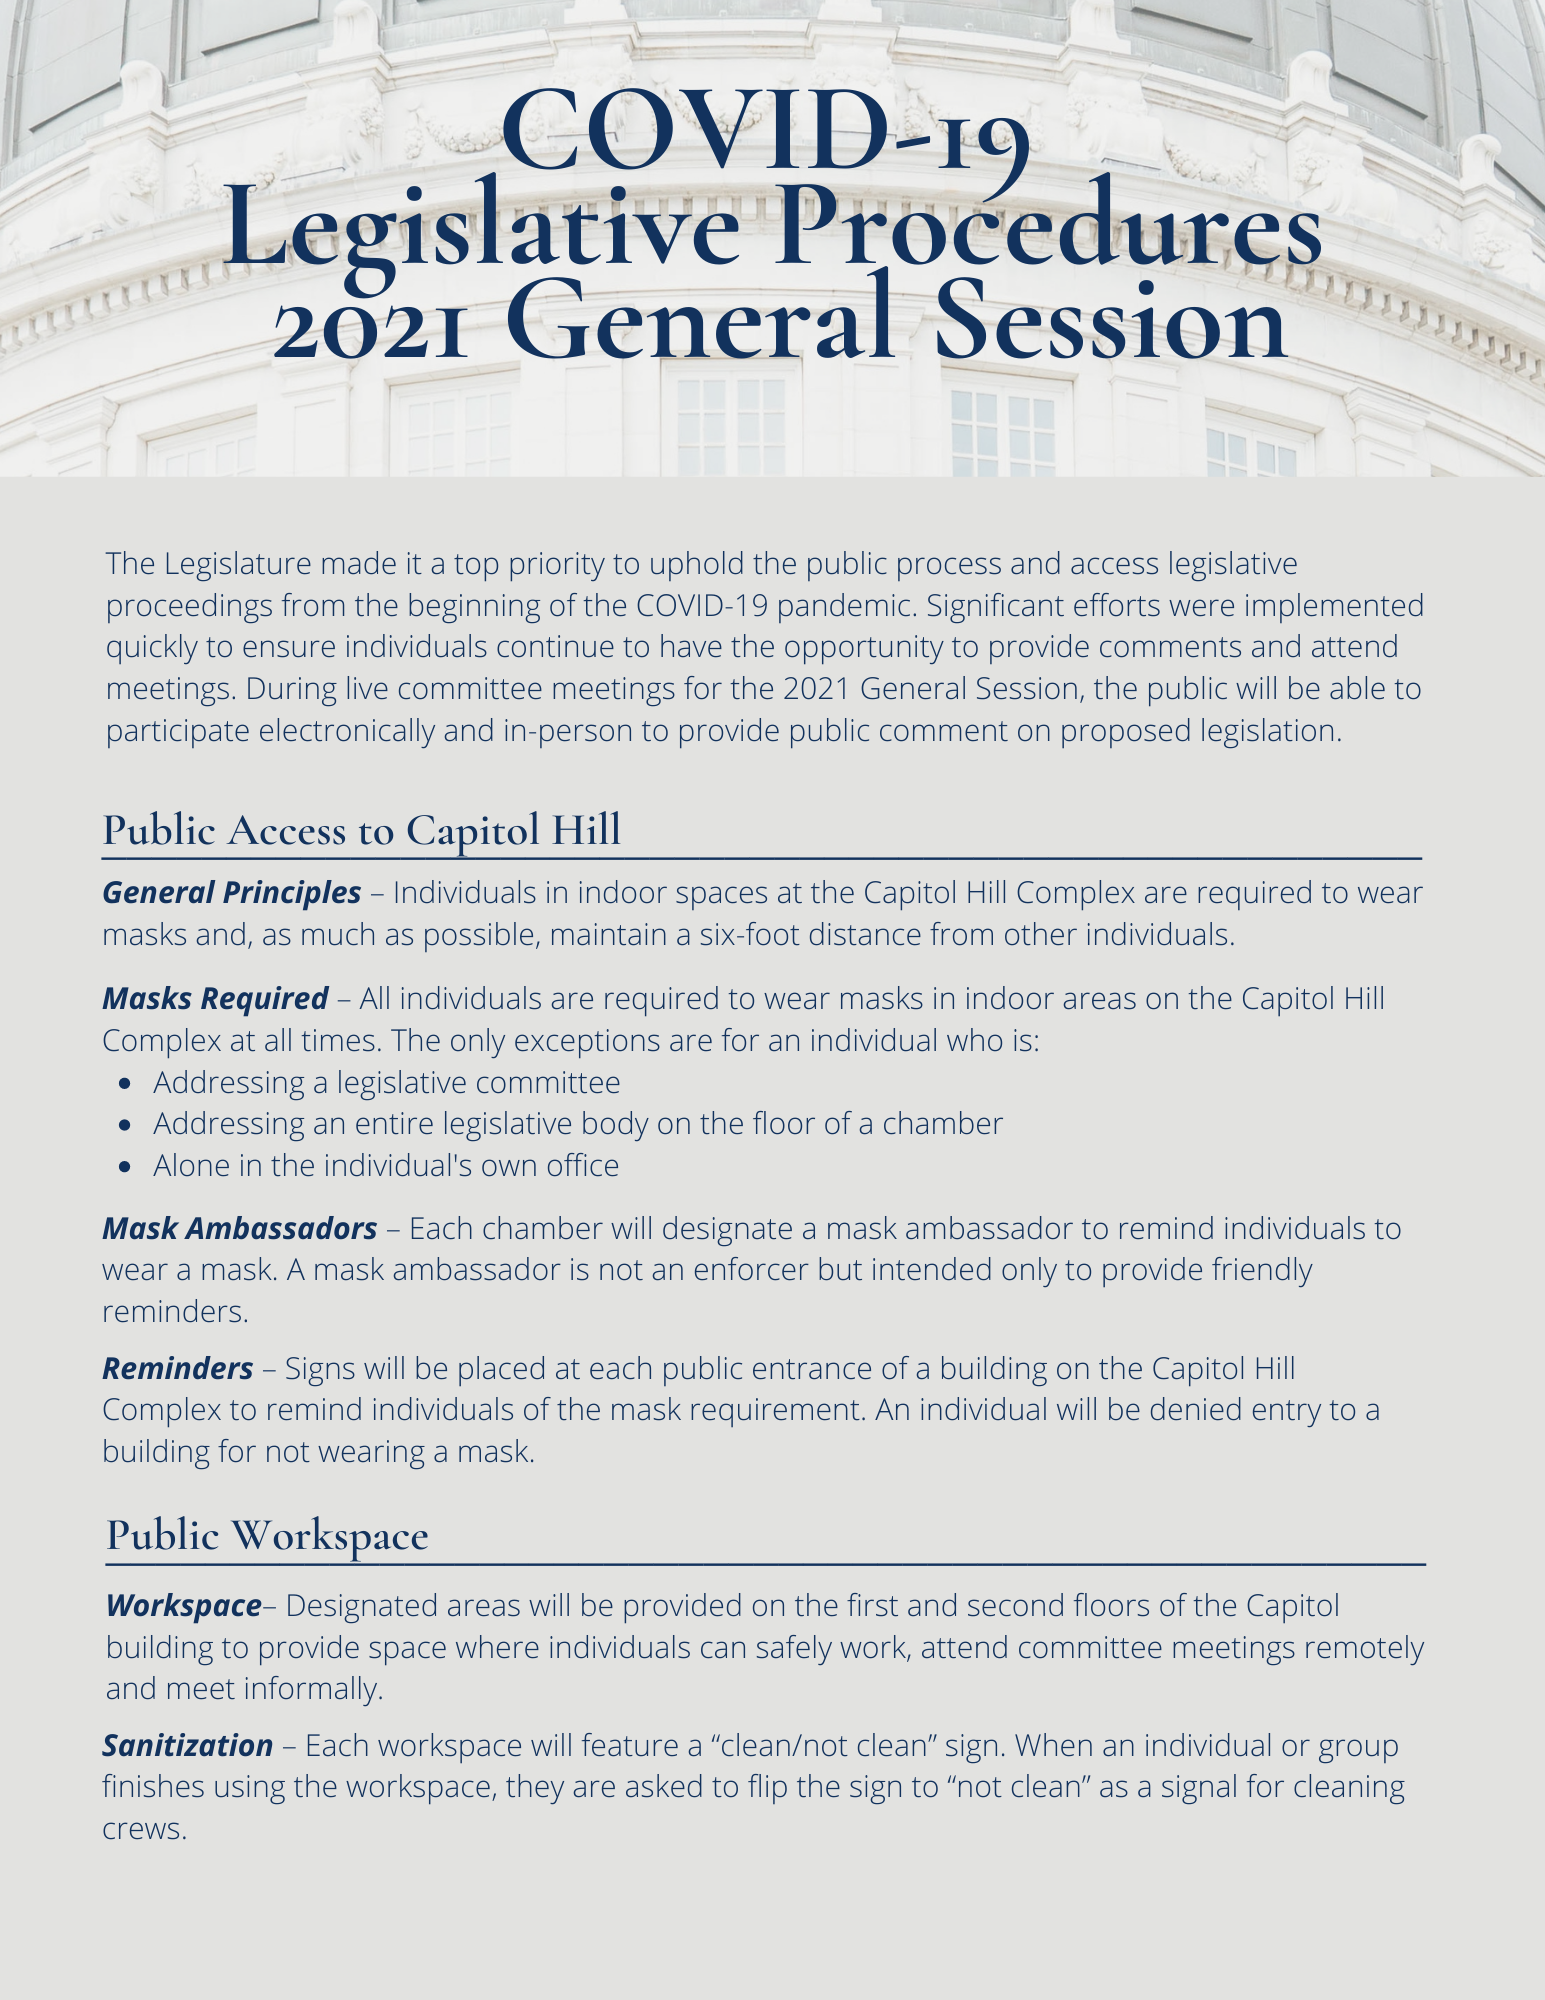 COVID-19 Legislative Procedures 2021 General Session page 1